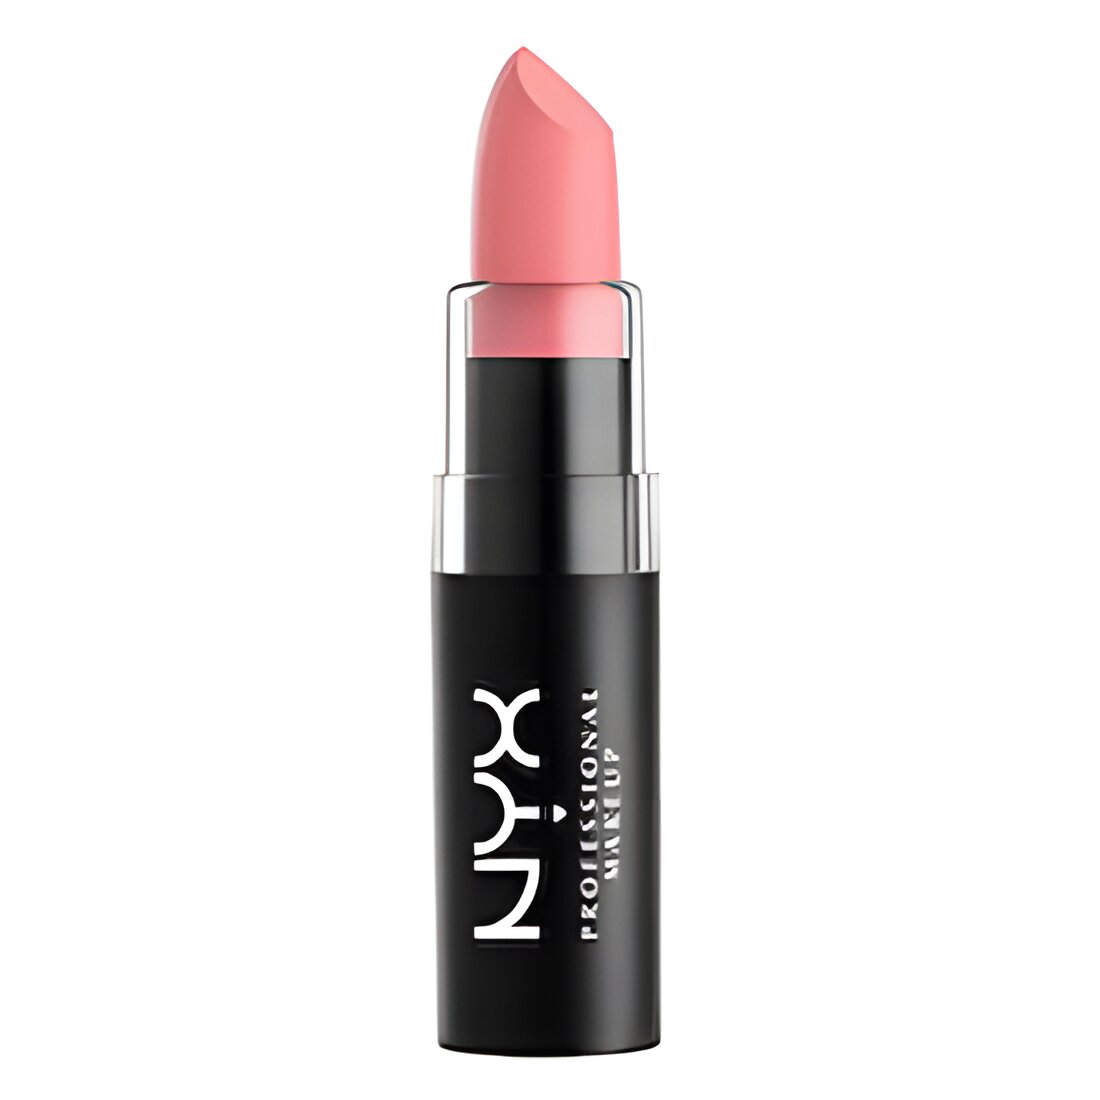 Free Lipstick From NYX Cosmetics